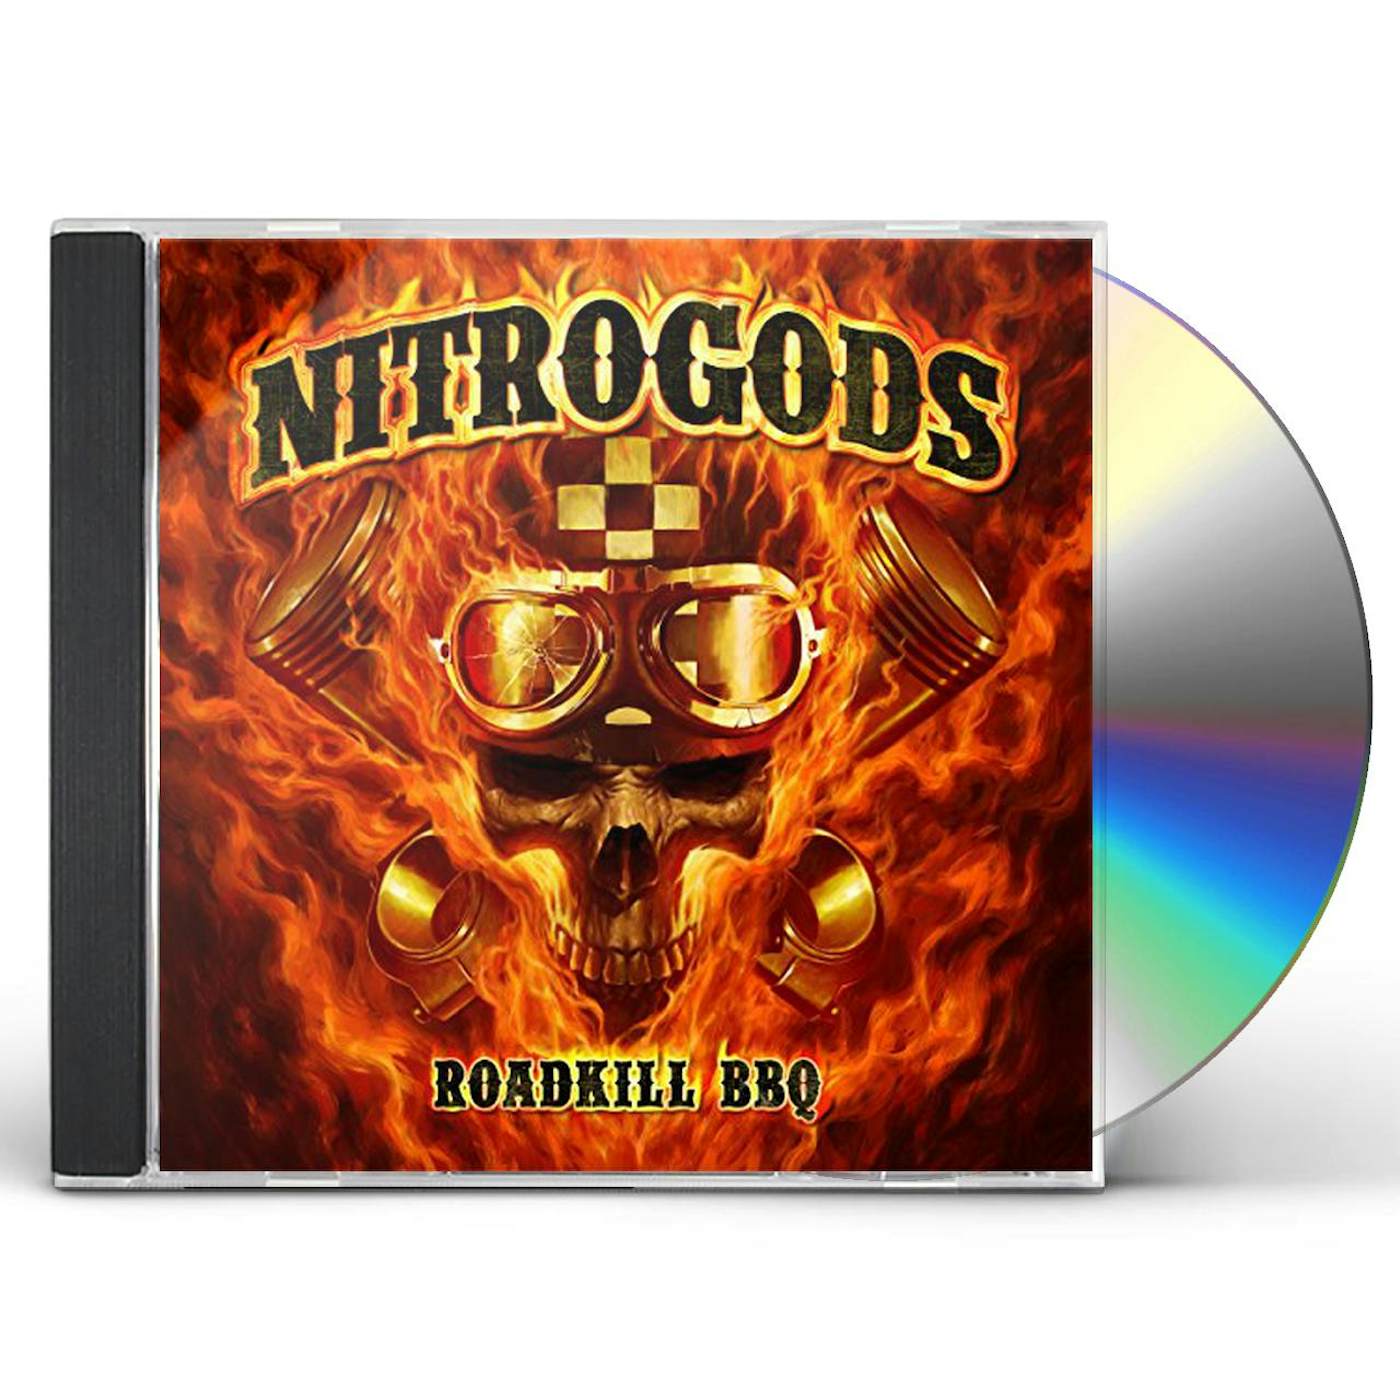 Nitrogods ROADKILL BBQ CD